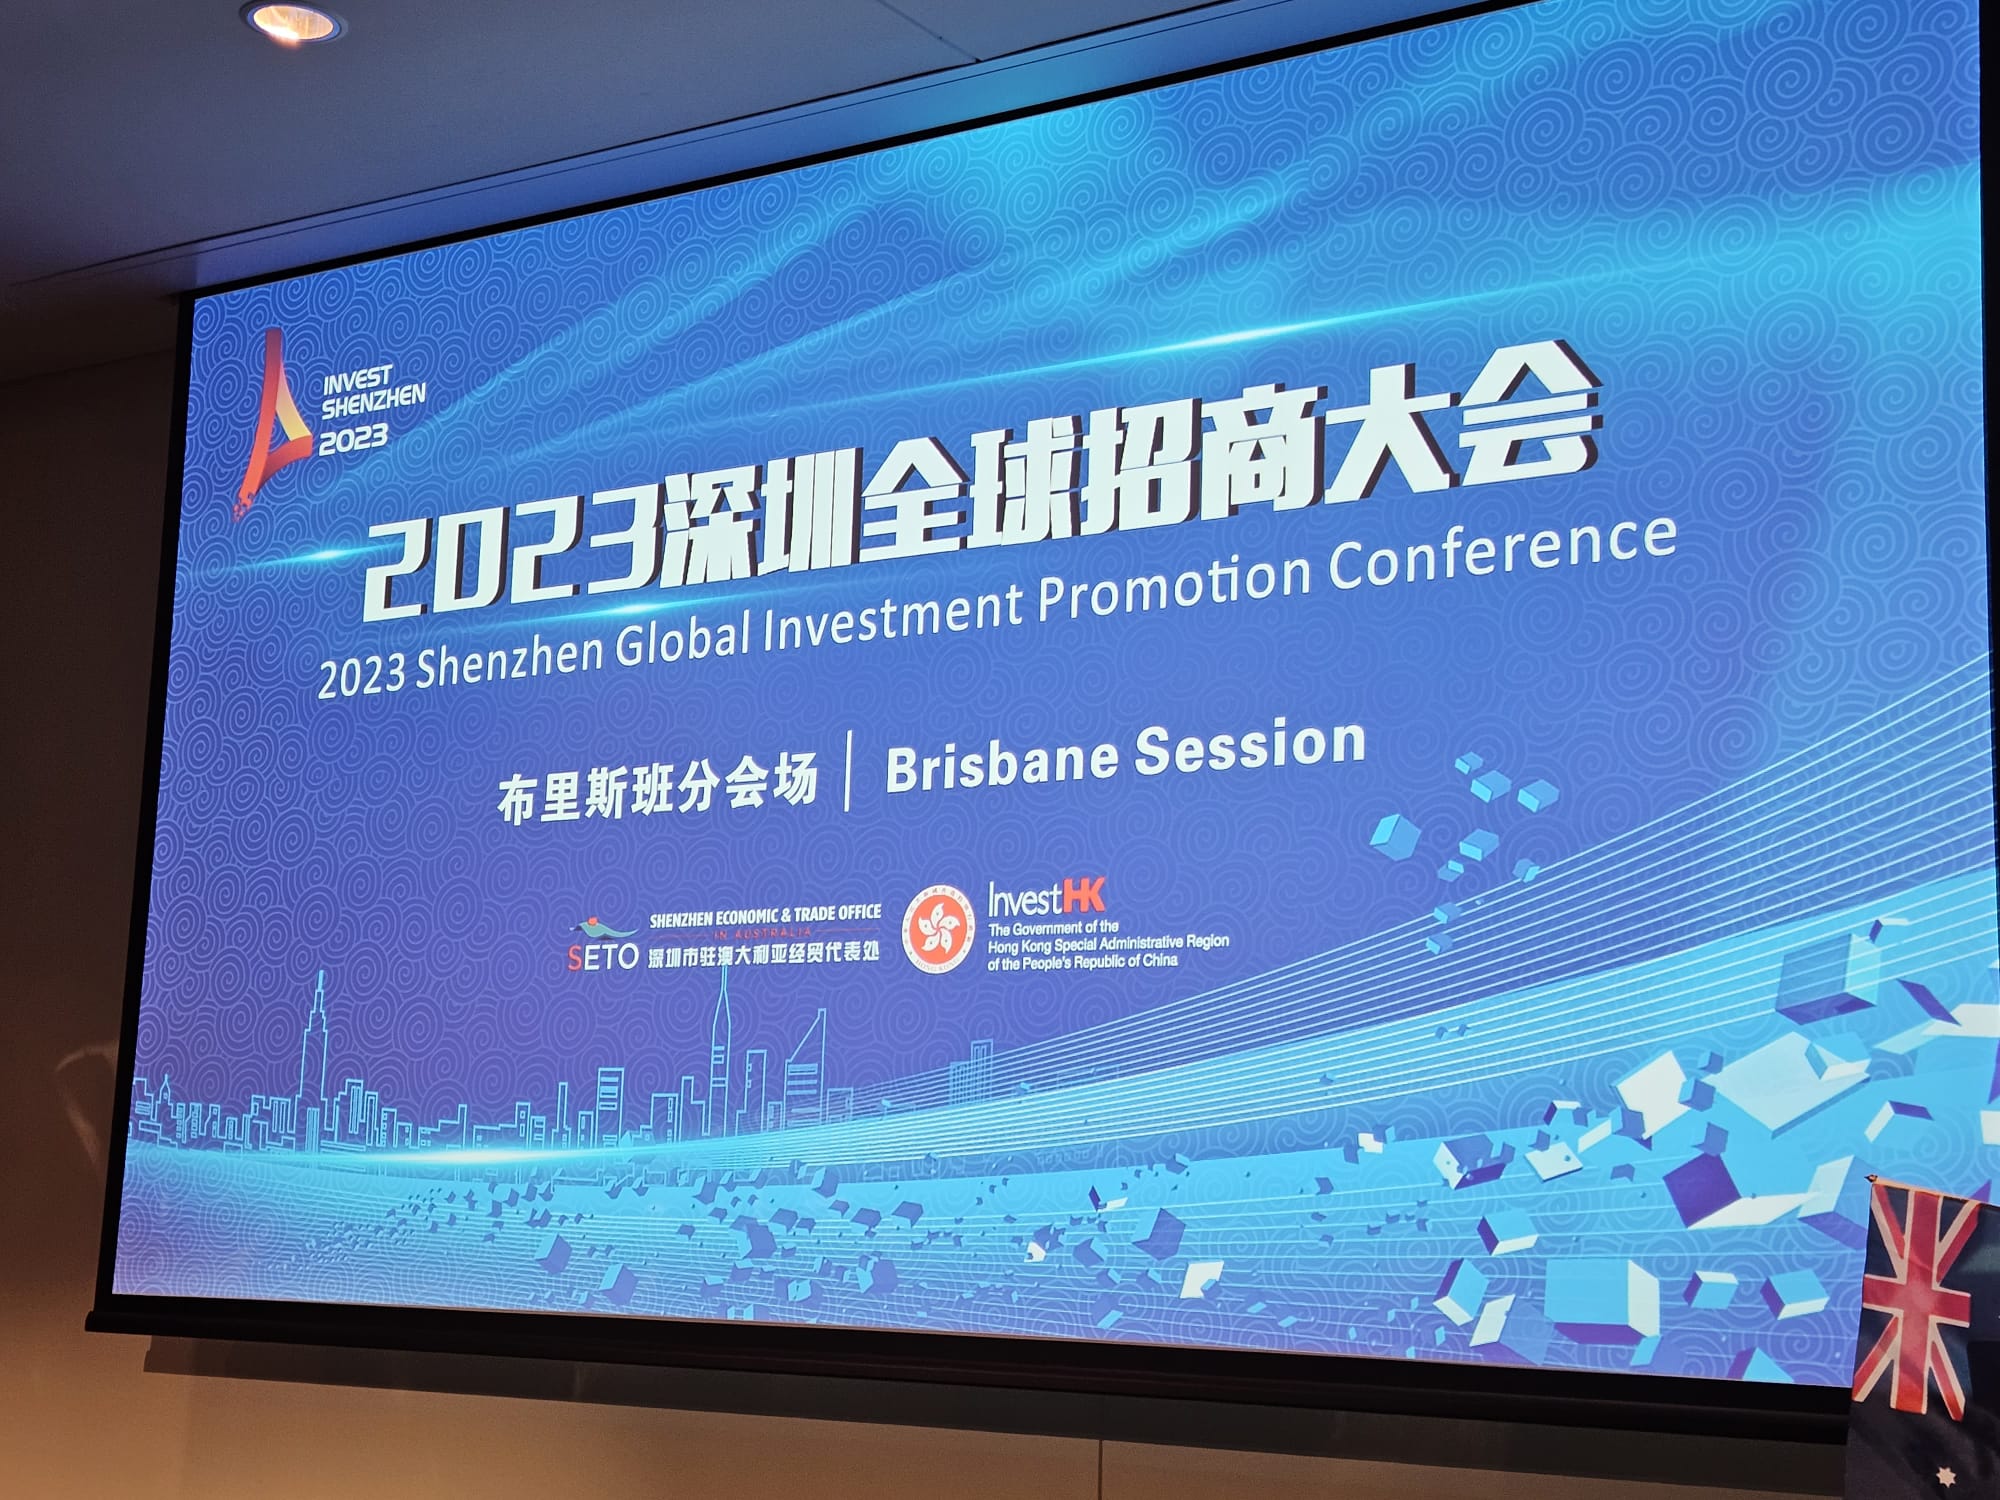 Shengzhen conference image